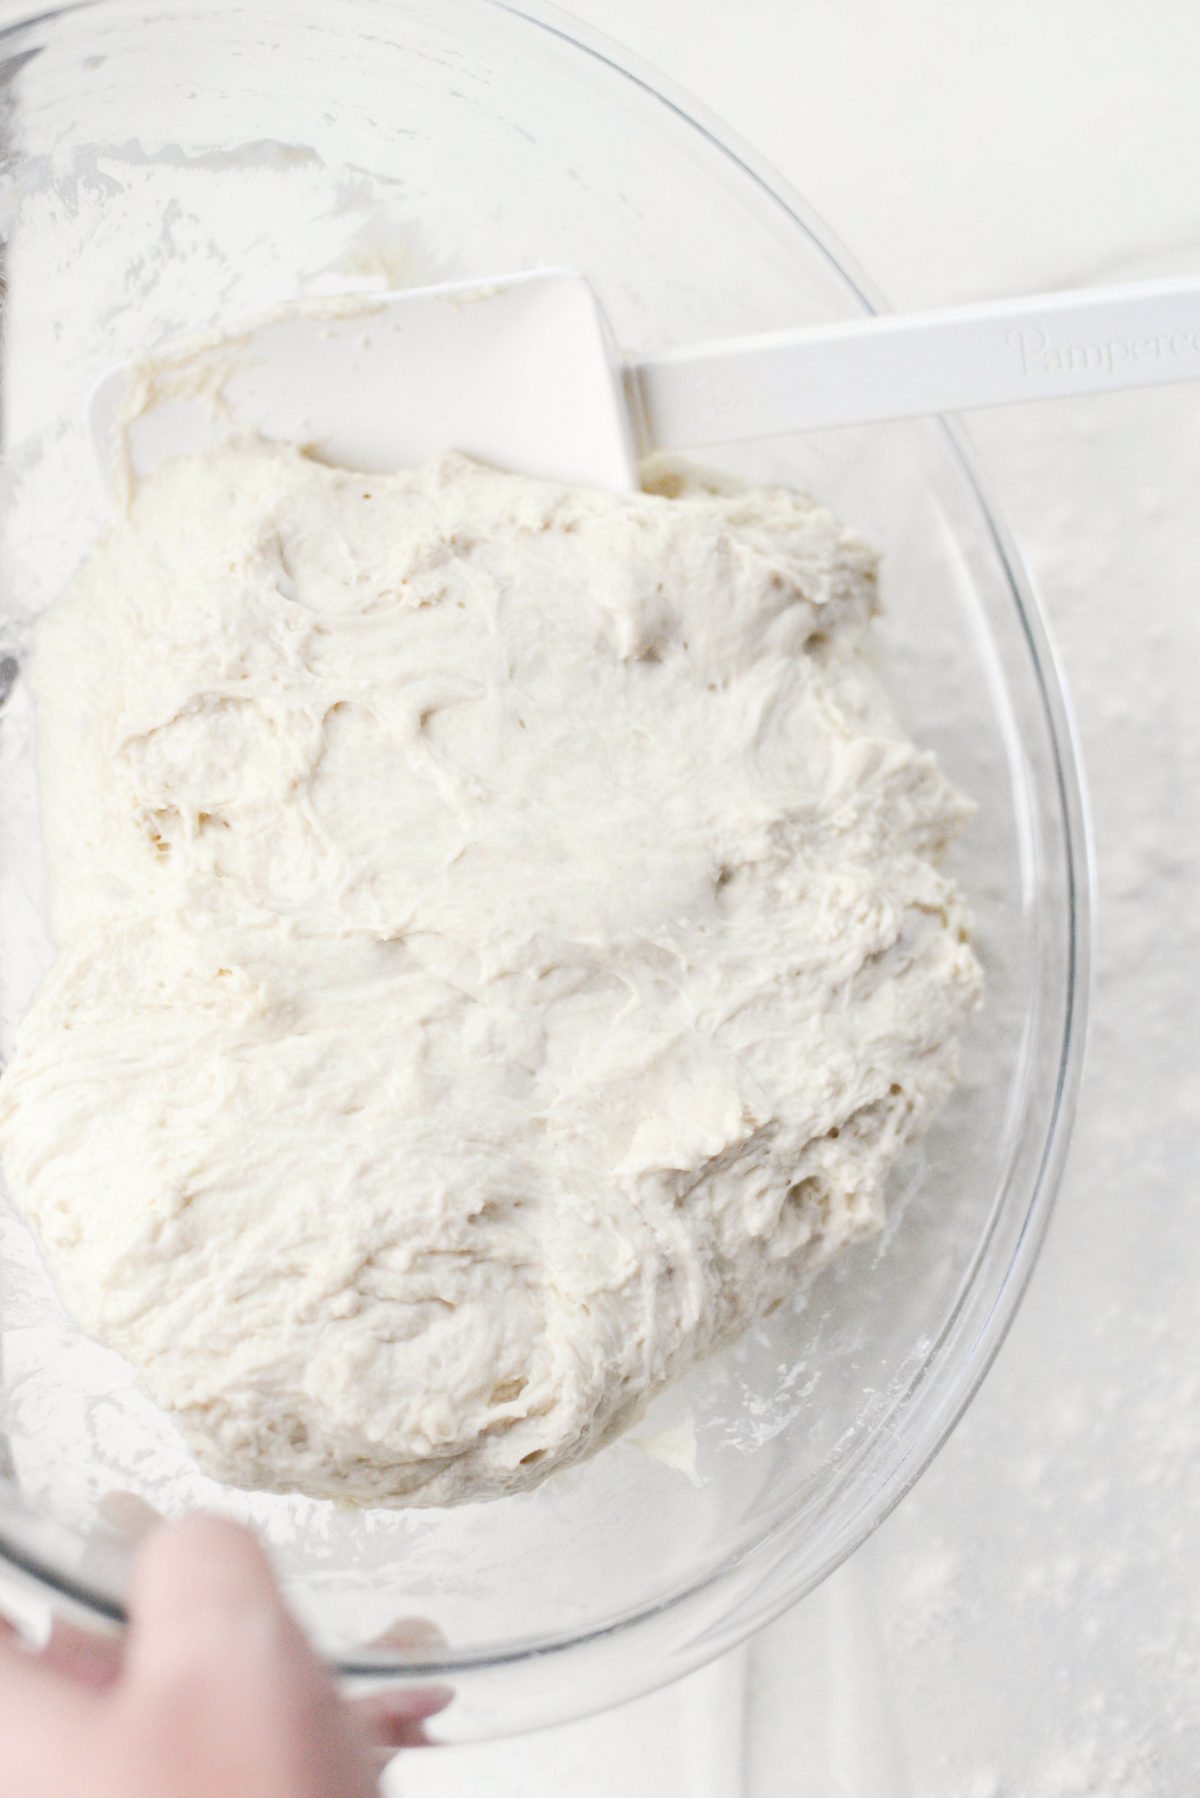 scrape dough onto floured surface